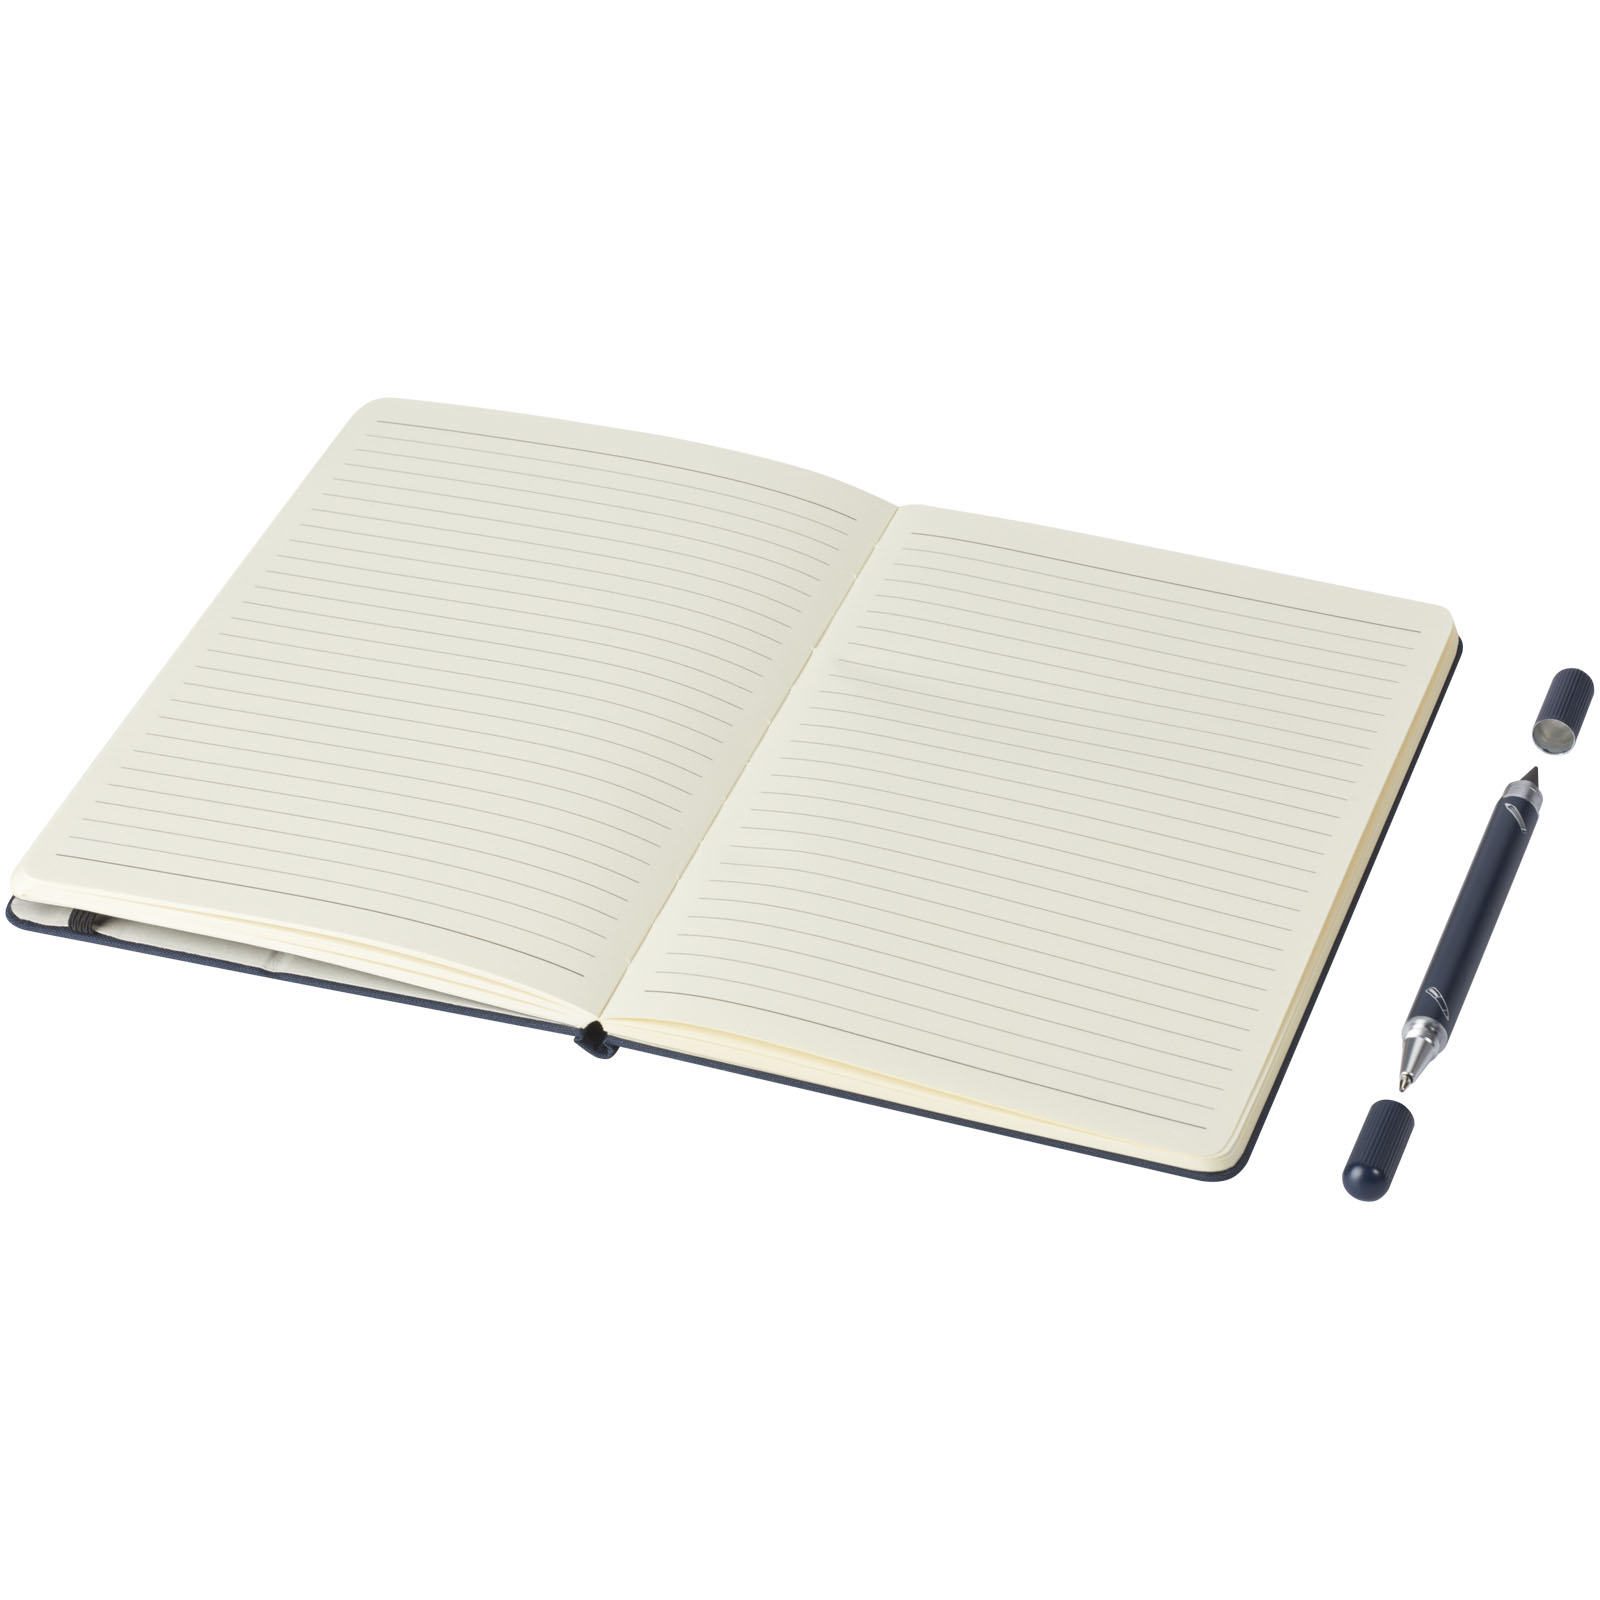 Advertising Hard cover notebooks - Skribo ballpoint pen and notebook set - 4